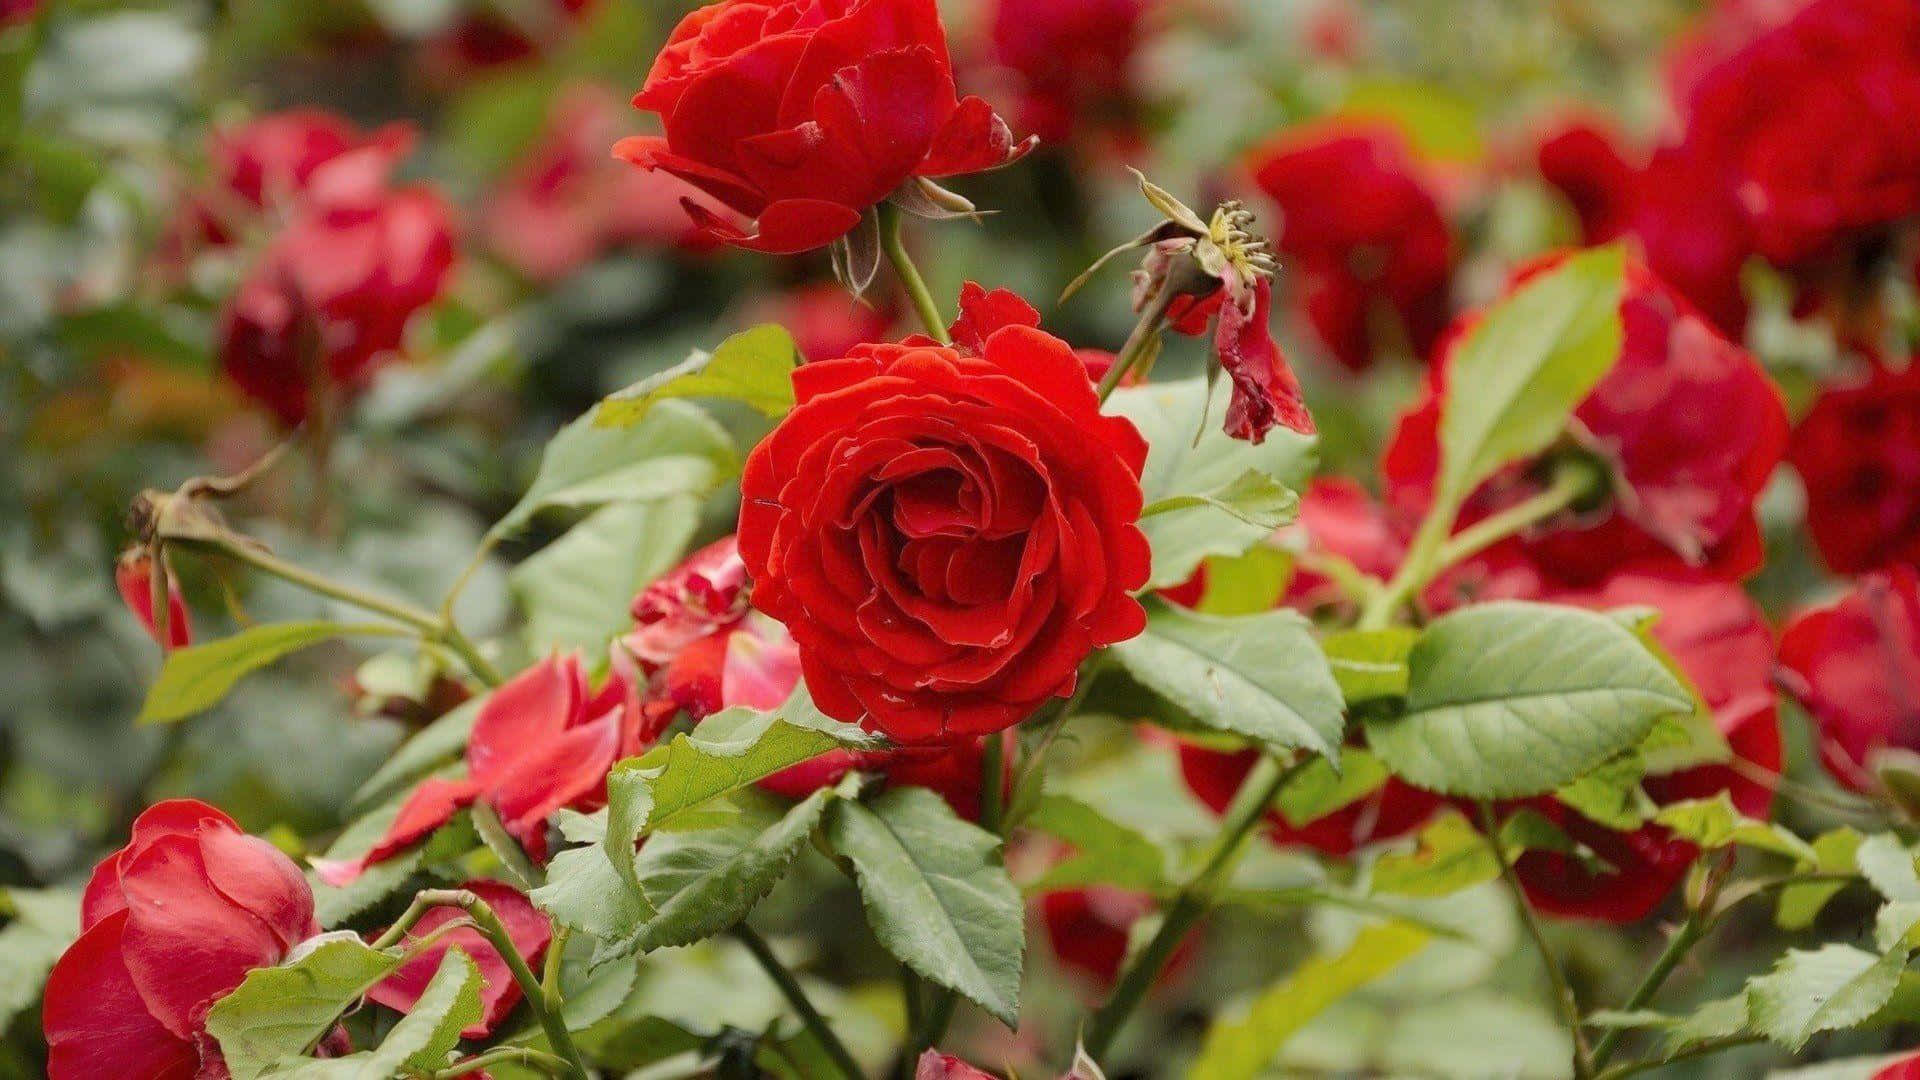 Rosada Giardino, Immagine Di Un Cespuglio Di Rose Rosse.